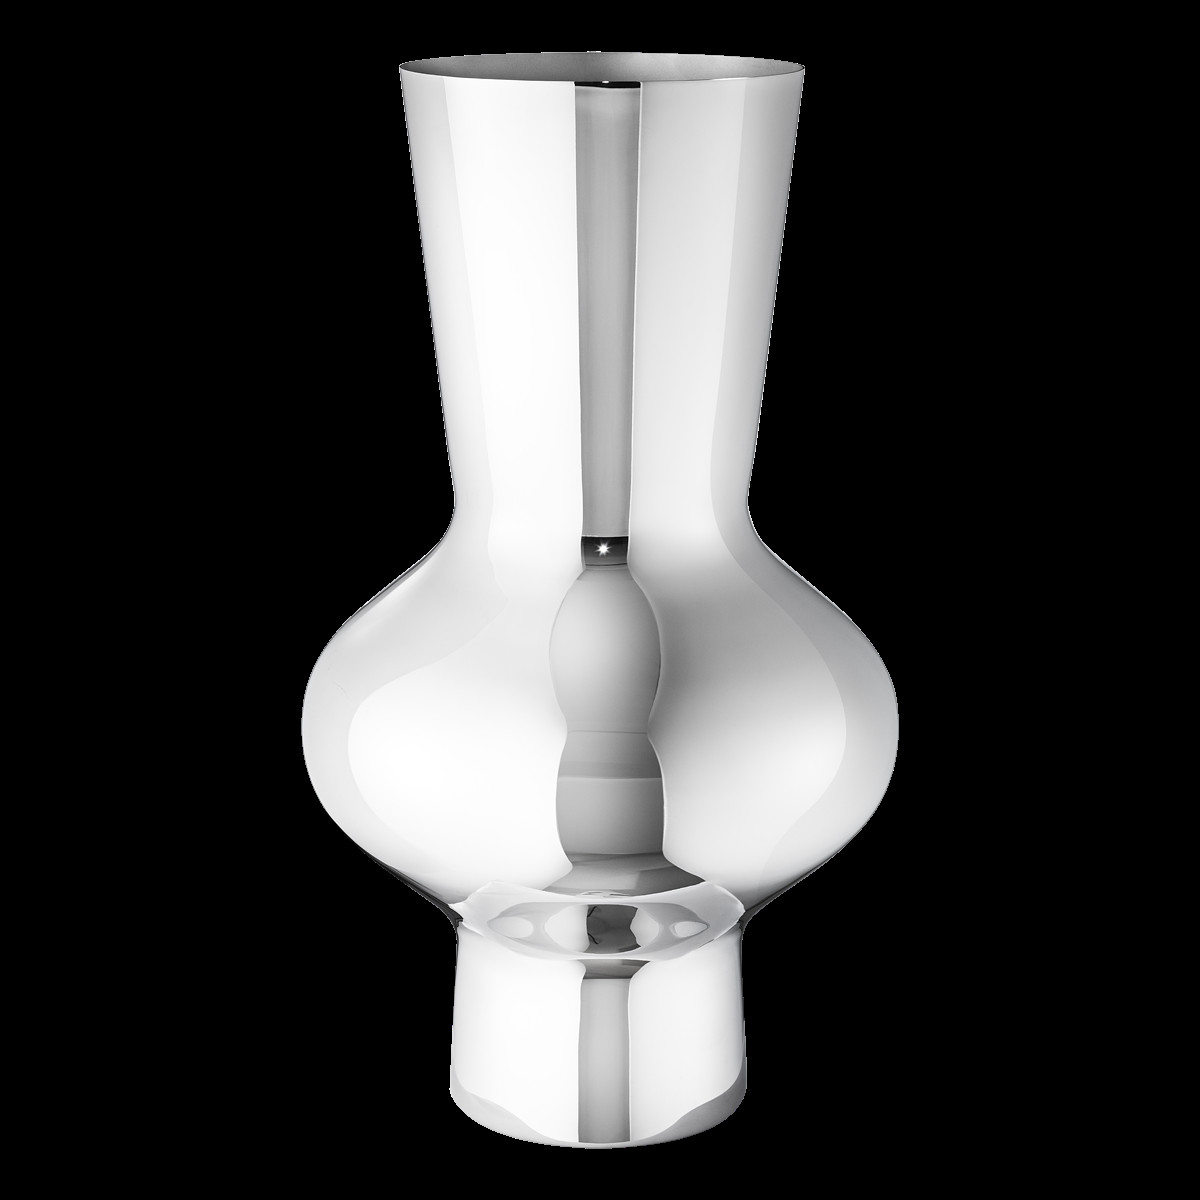 26 Famous Georg Jensen Cafu Vase 2024 free download georg jensen cafu vase of alfredo vase large for pack 3586206 1200 0